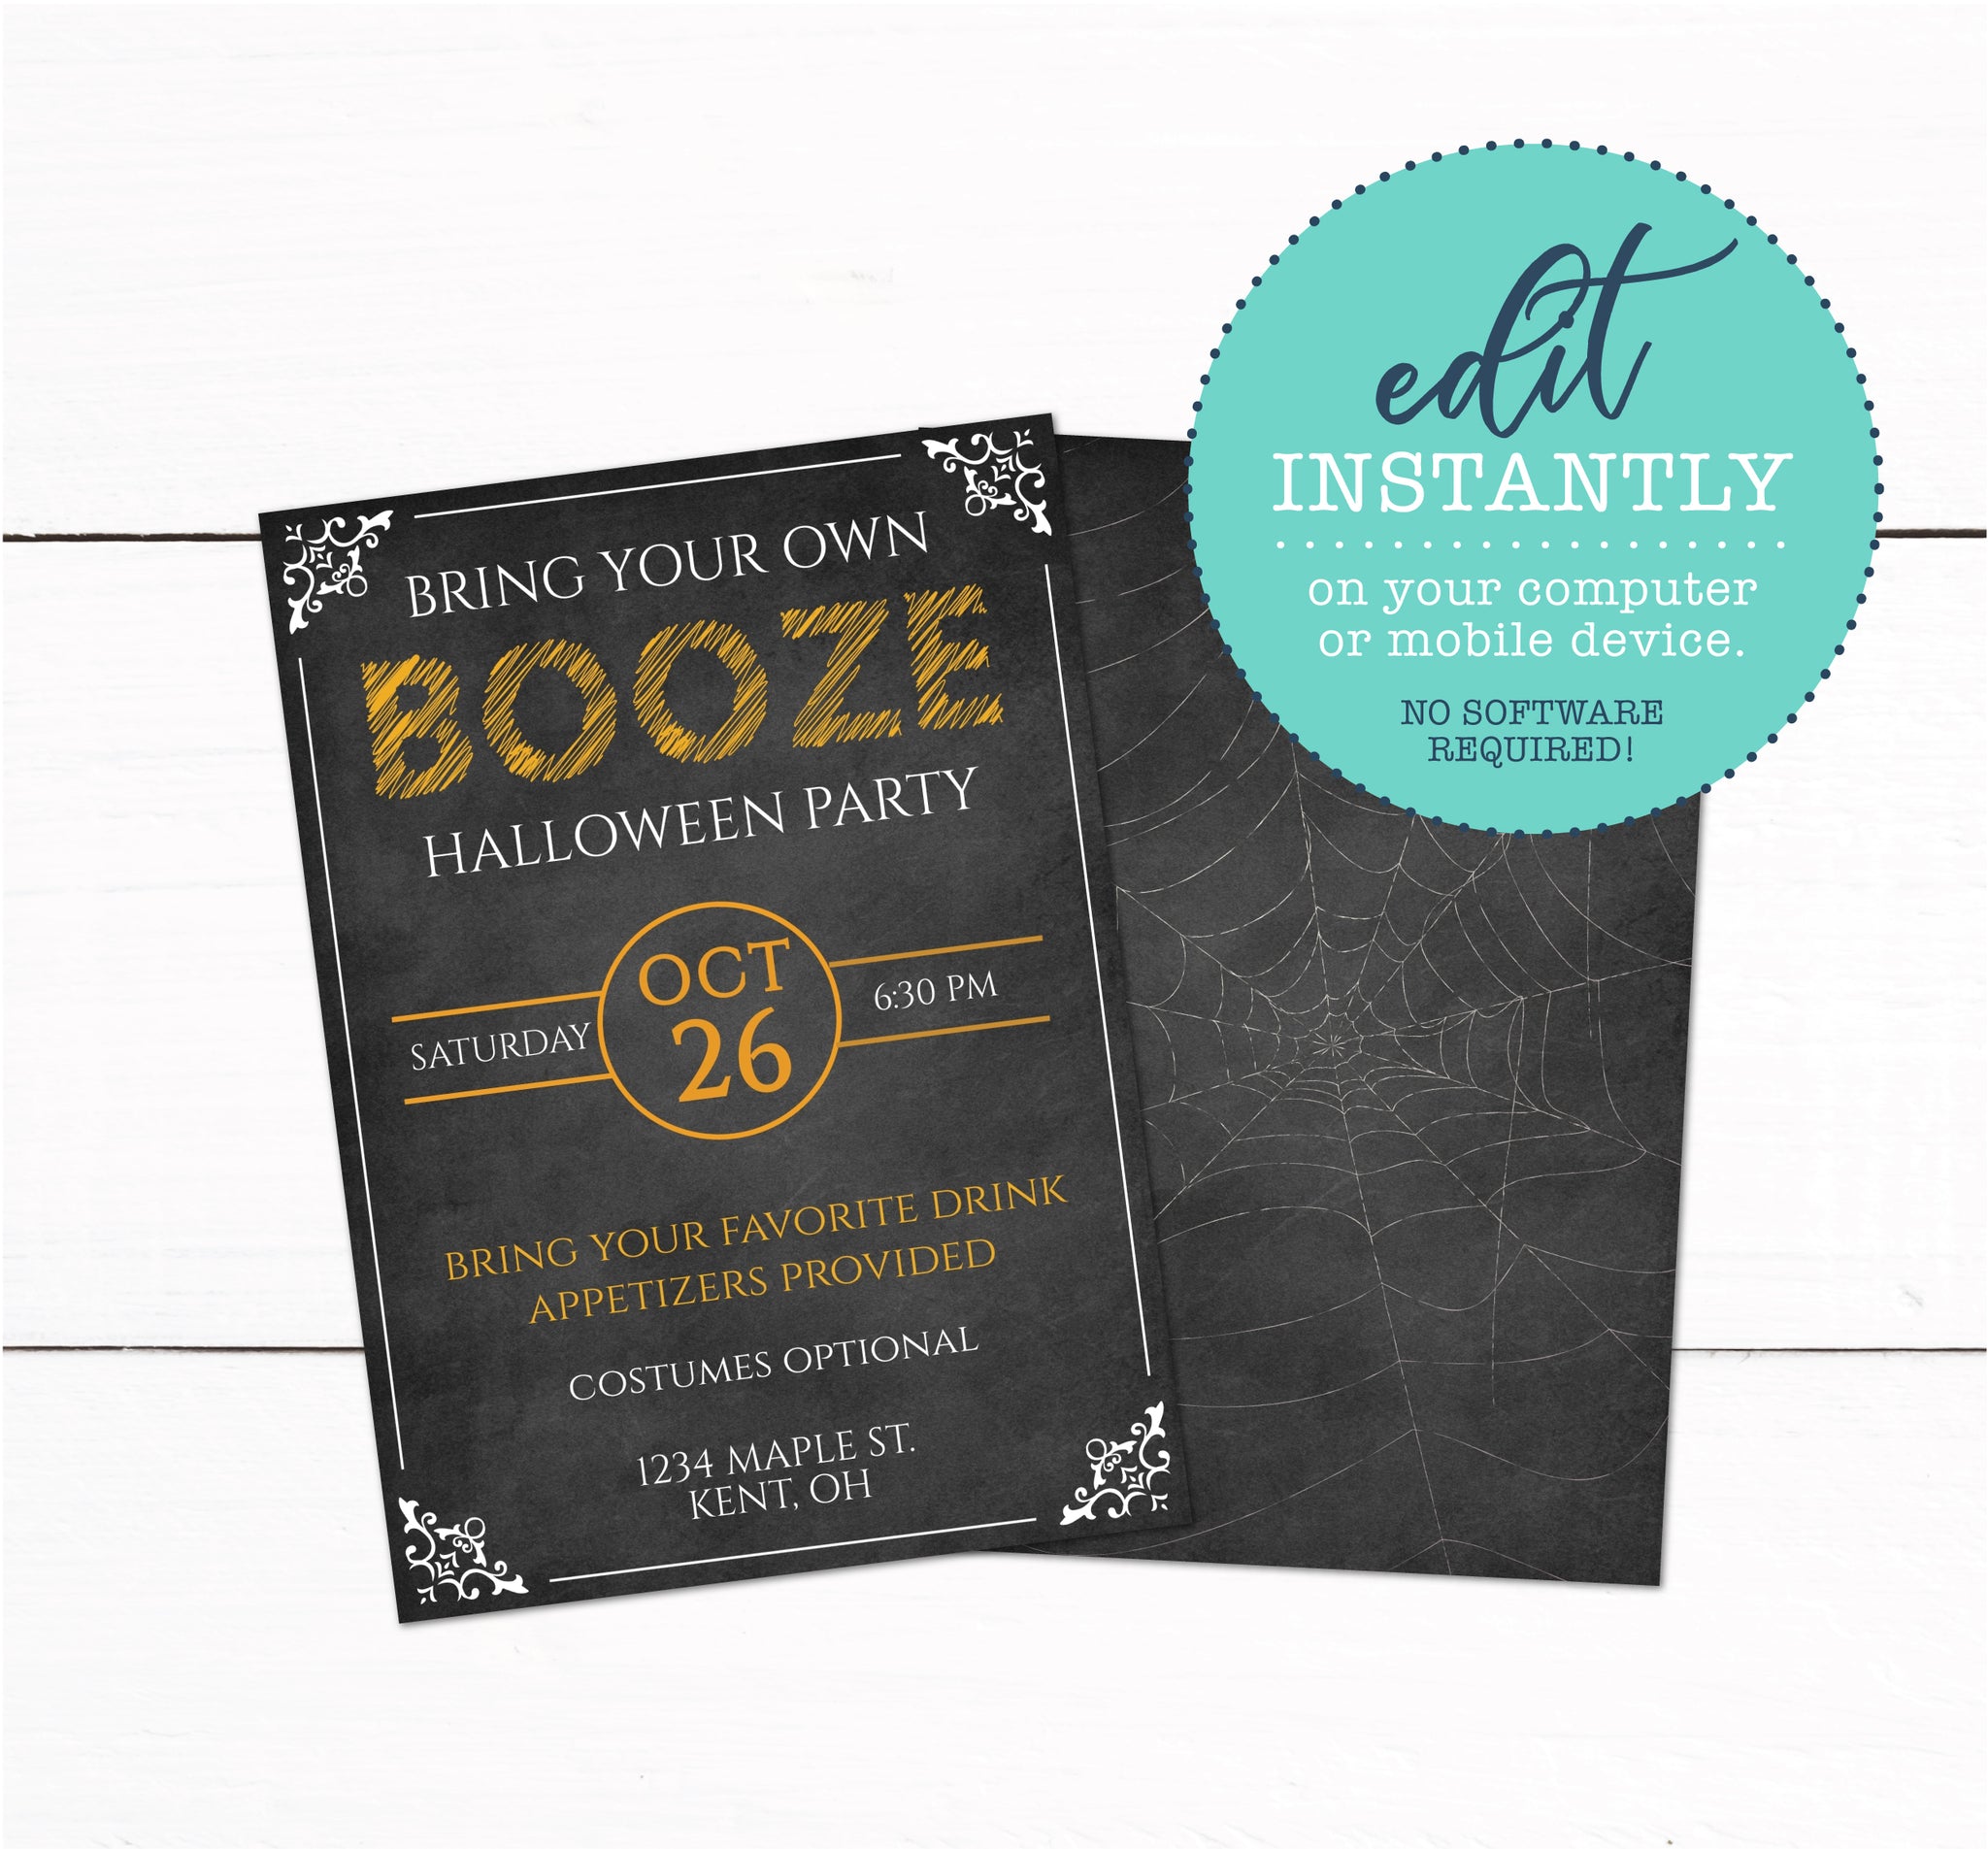 Adult Halloween Booze Party Invitation